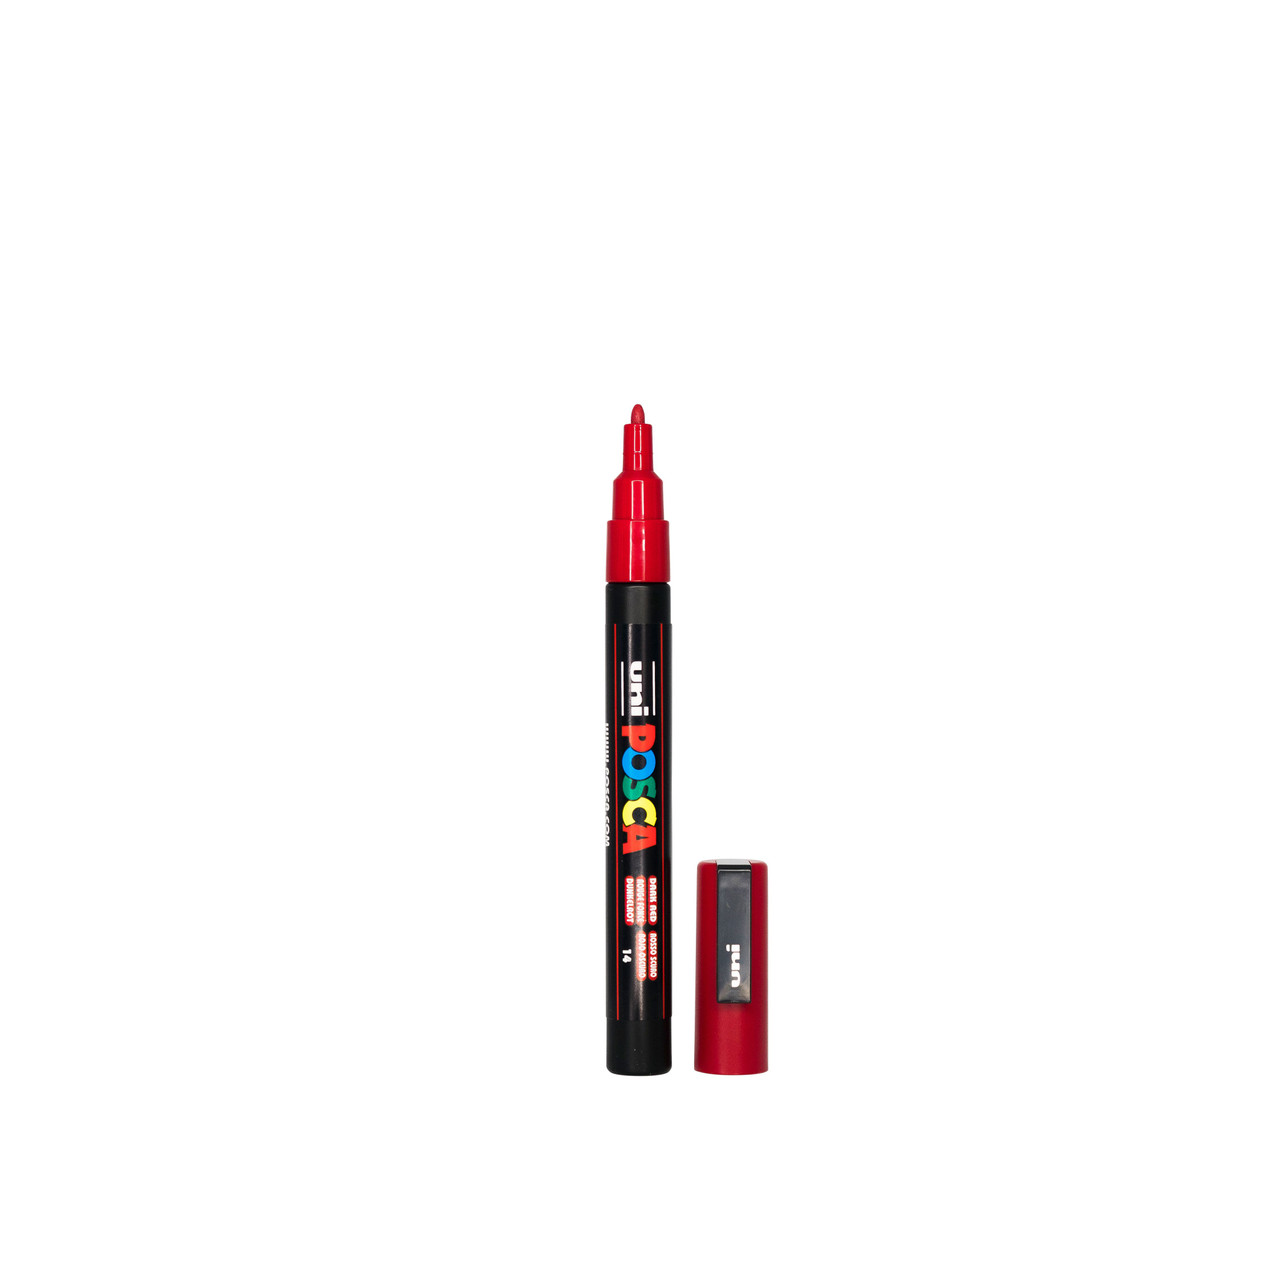 Uniball POSCA PC-3M Dark Red Paint Marking Pen